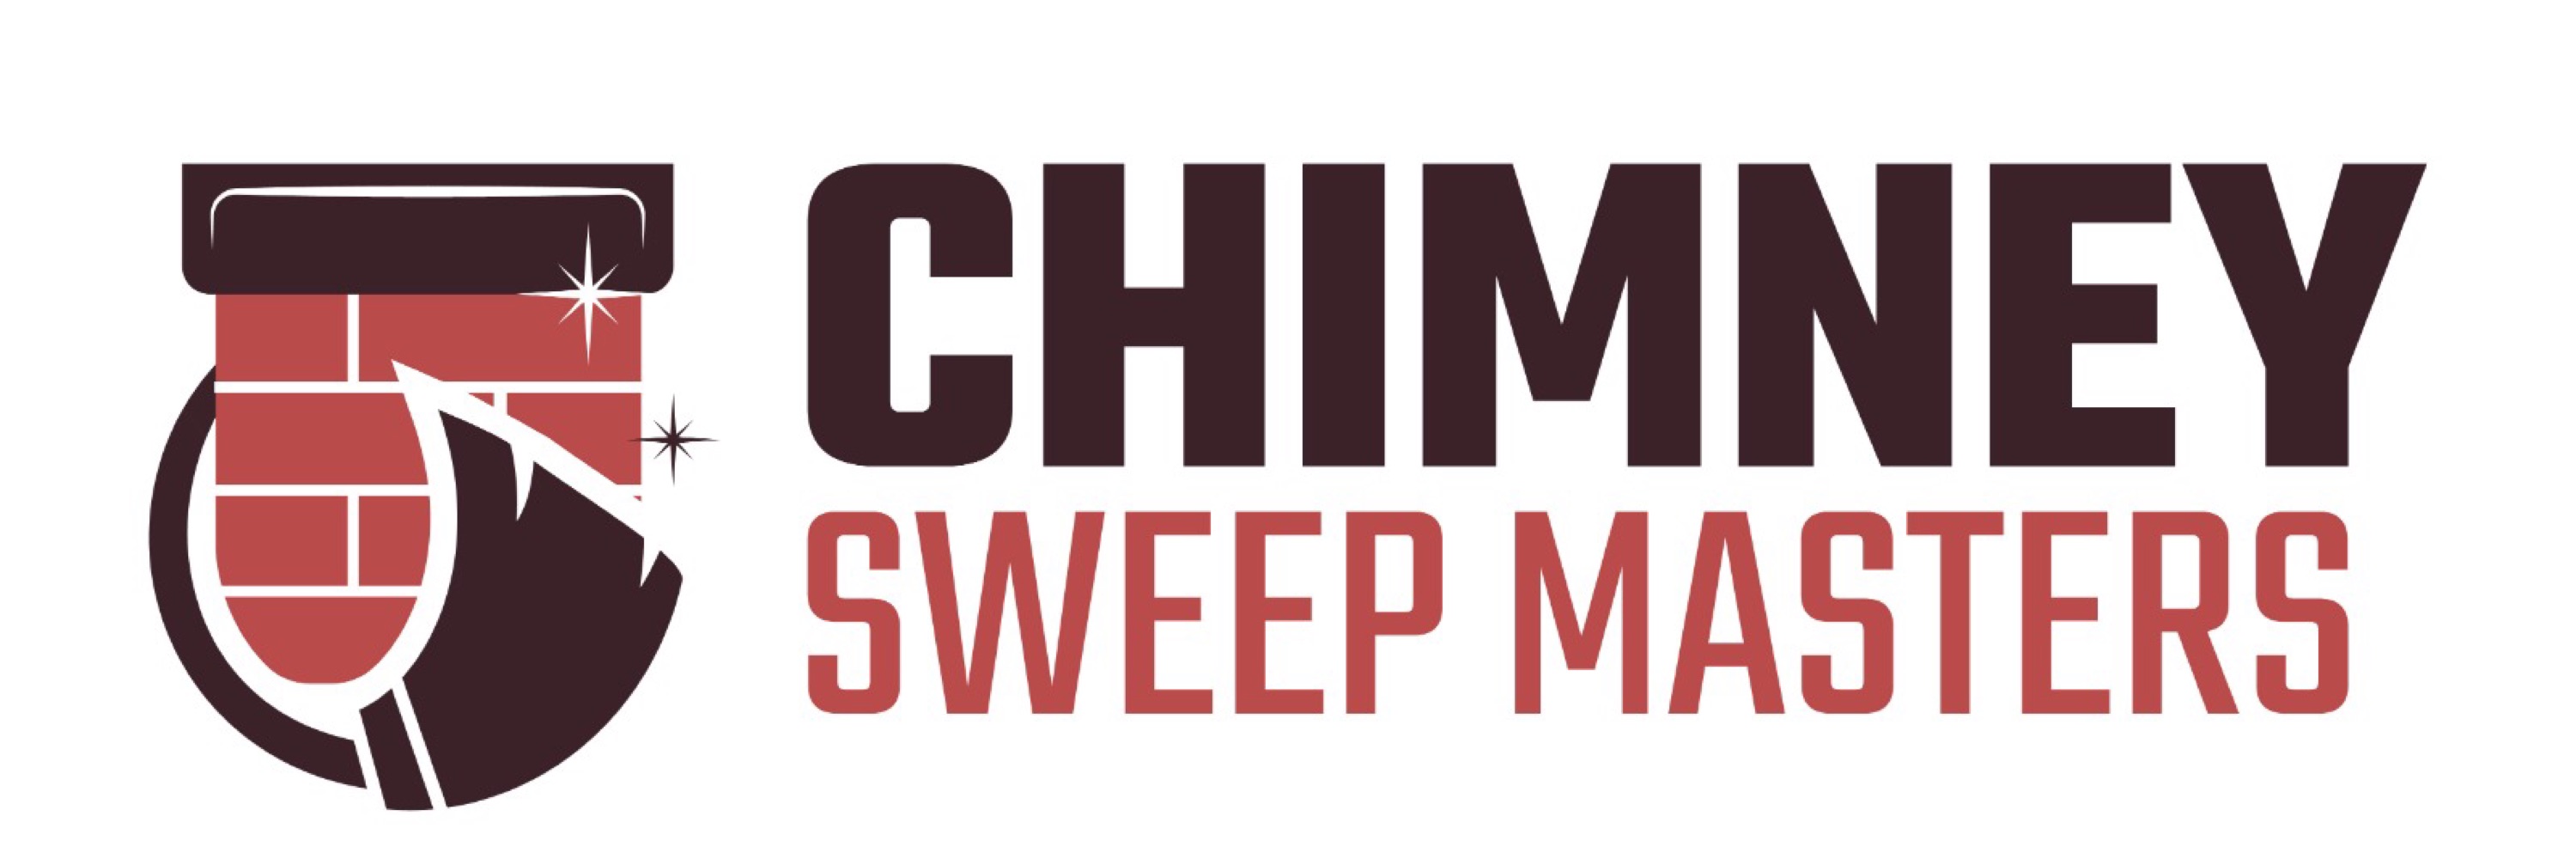 Chimney Sweep Masters Logo